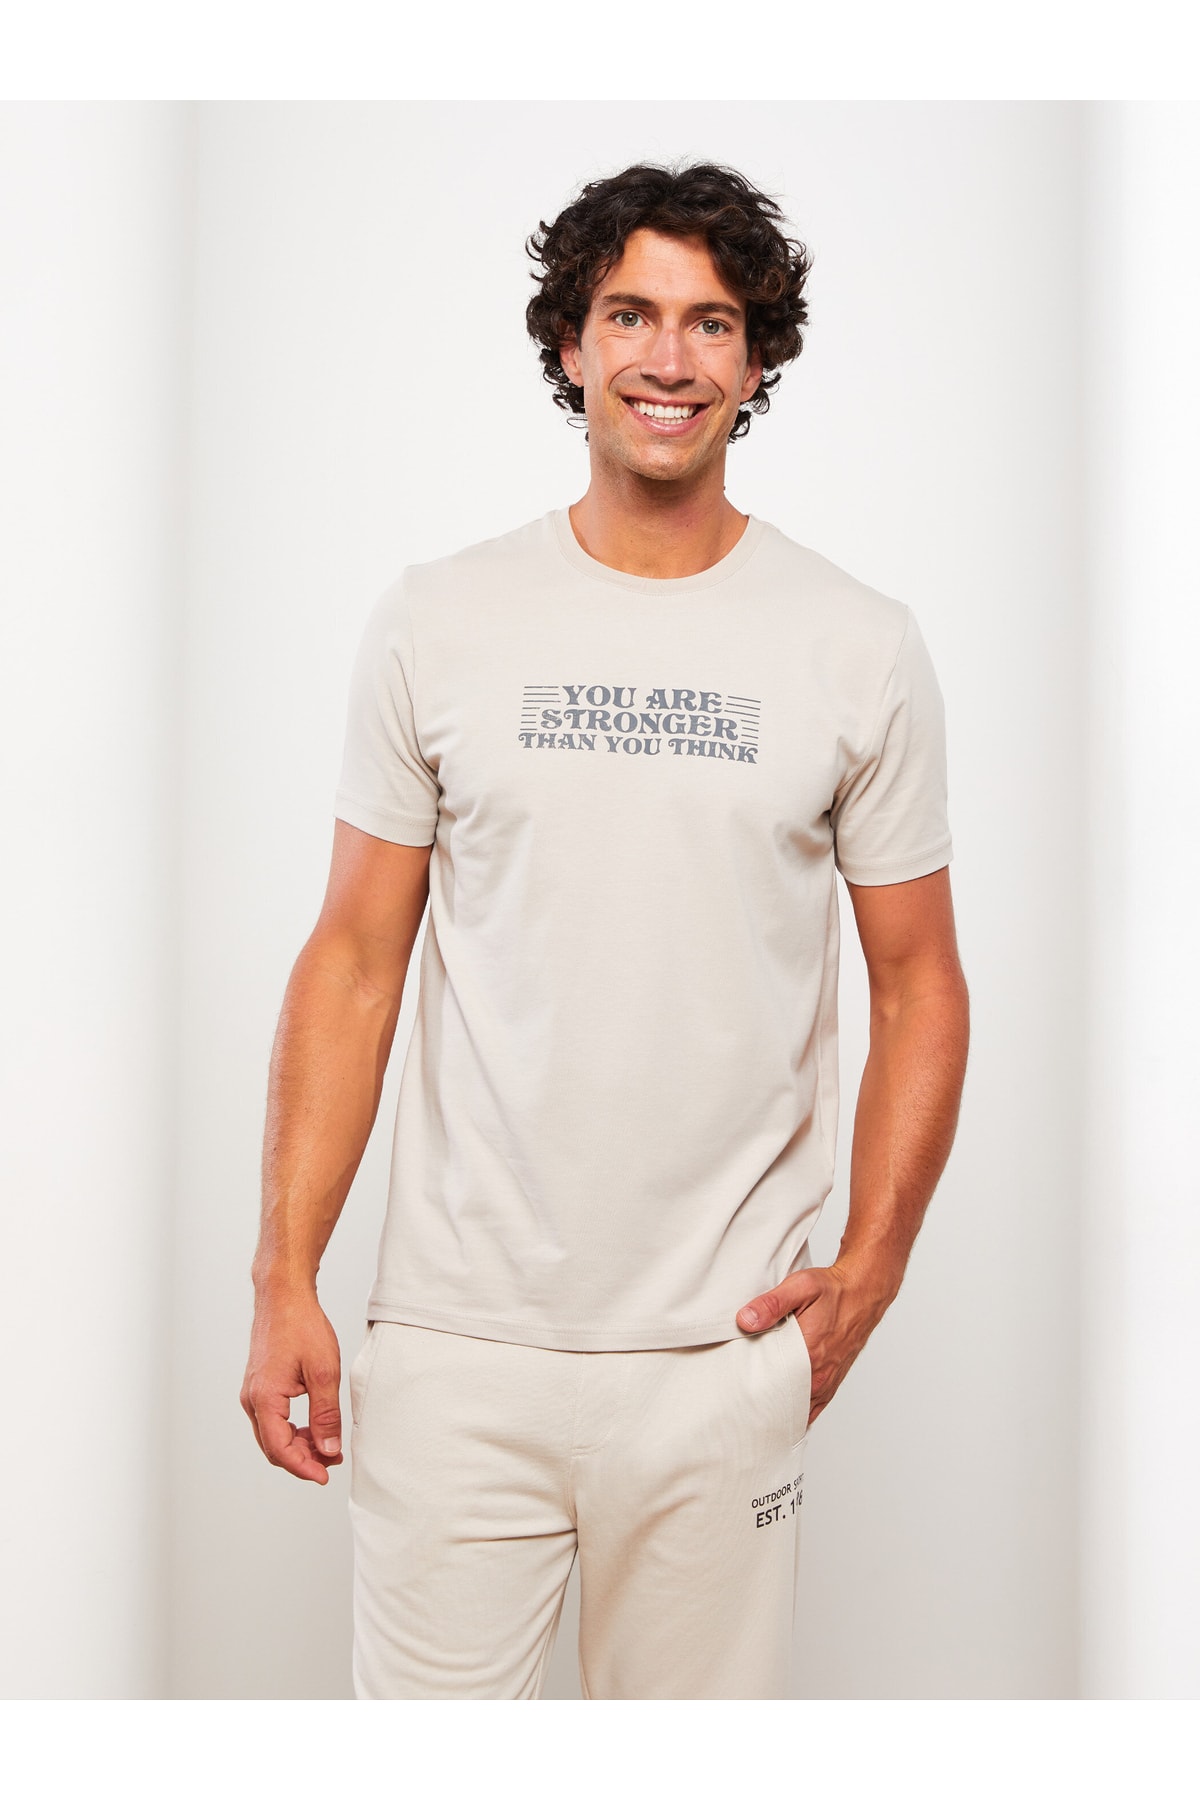 LC Waikiki Men's Crew Neck Printed Short Sleeve T-Shirt